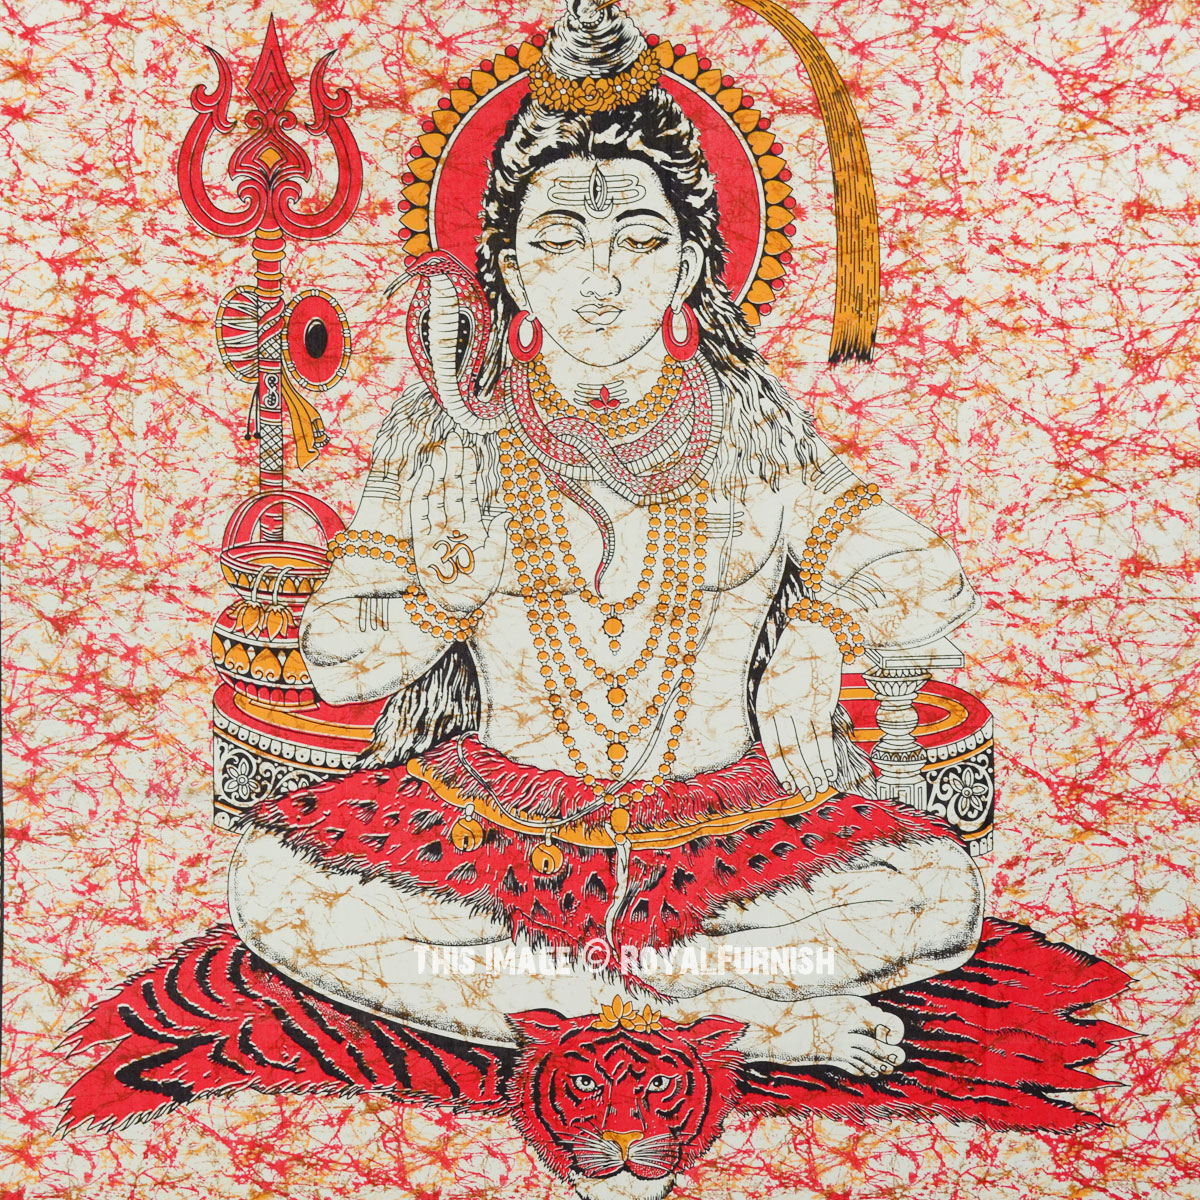 SMOKING Shiva Tapestry Hindu God Yoga Spiritual Room Wall Hanging POSTER